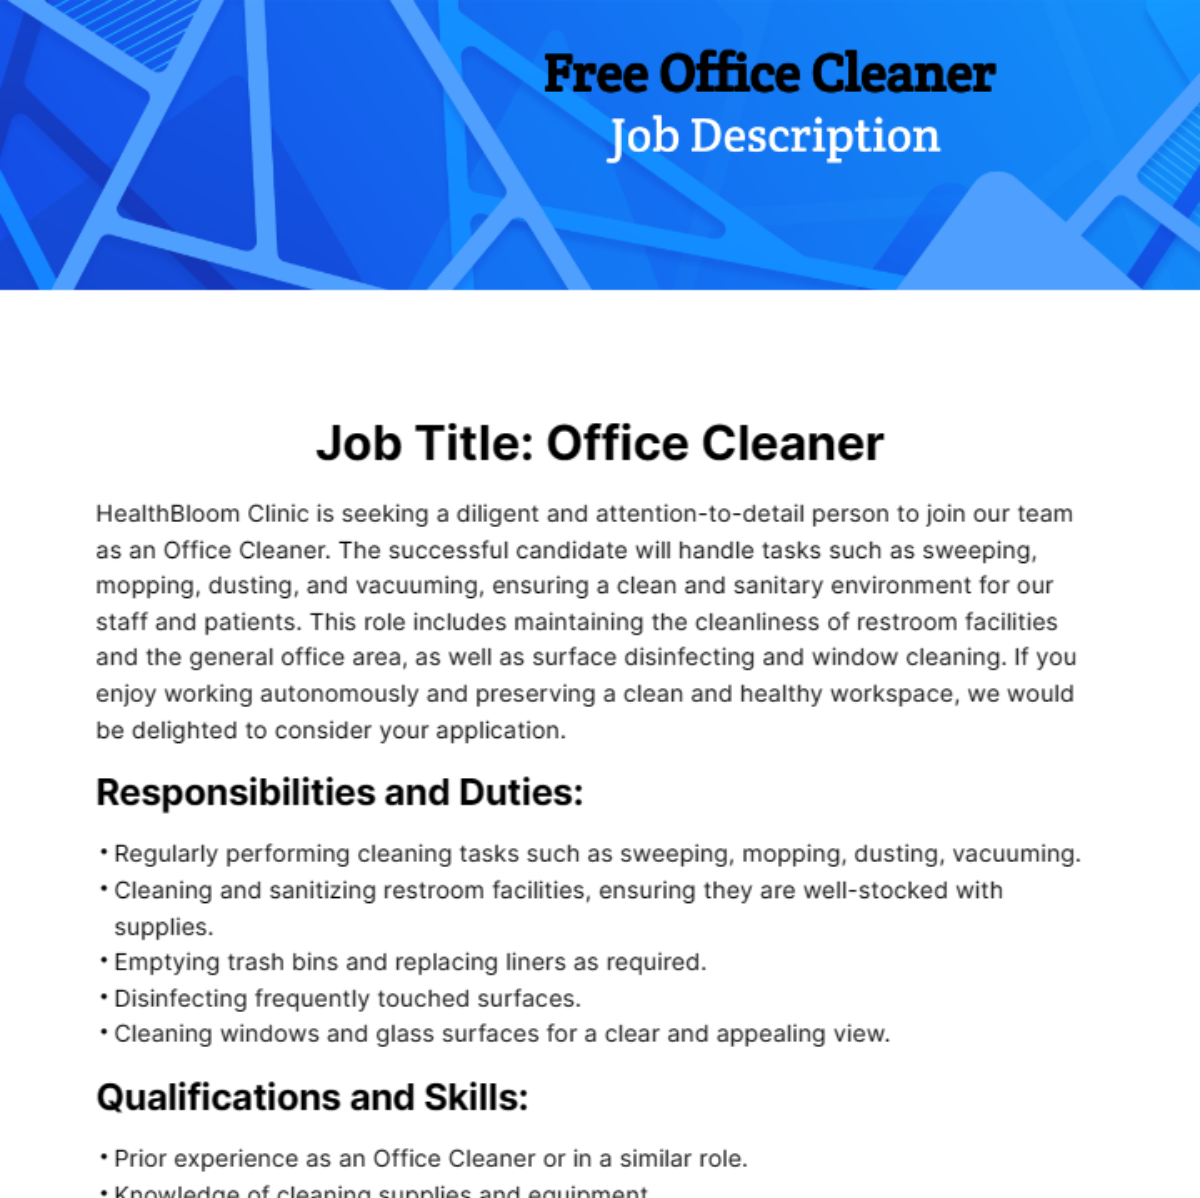 Free Office Cleaner Job Description Template